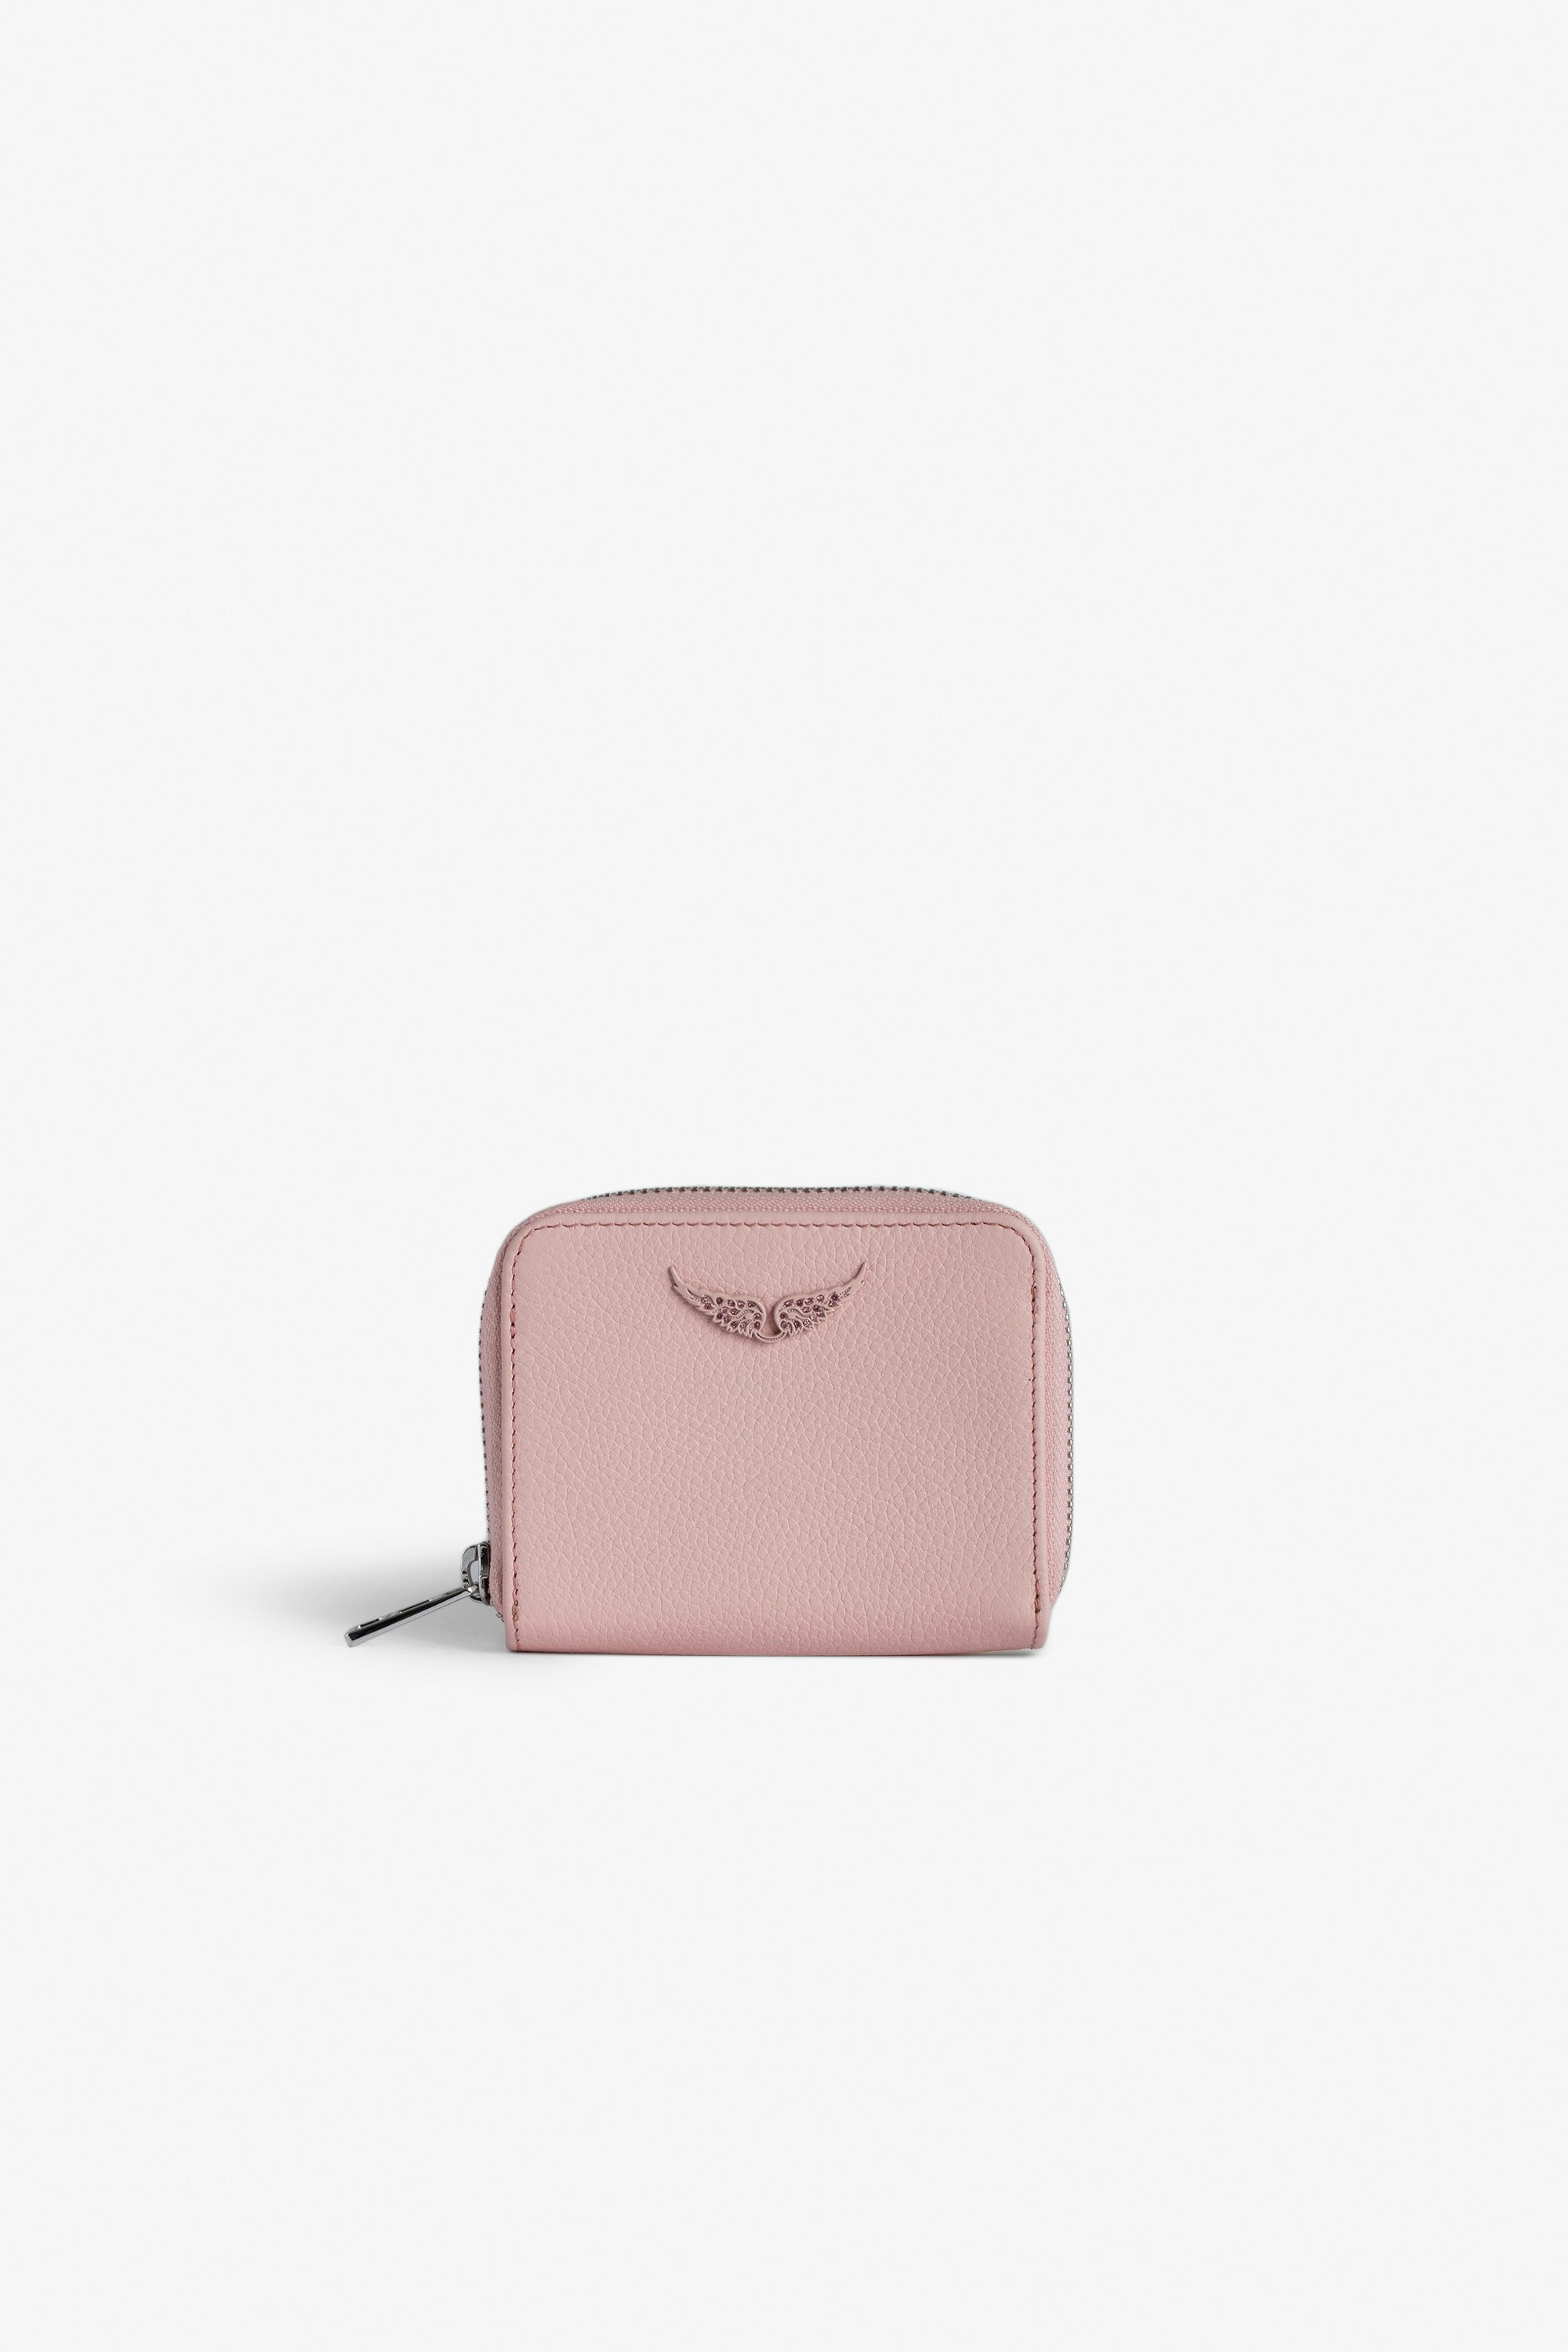 Monedero Mini ZV - Cartera rosa de piel granulada con colgante de alas con strass para mujer.